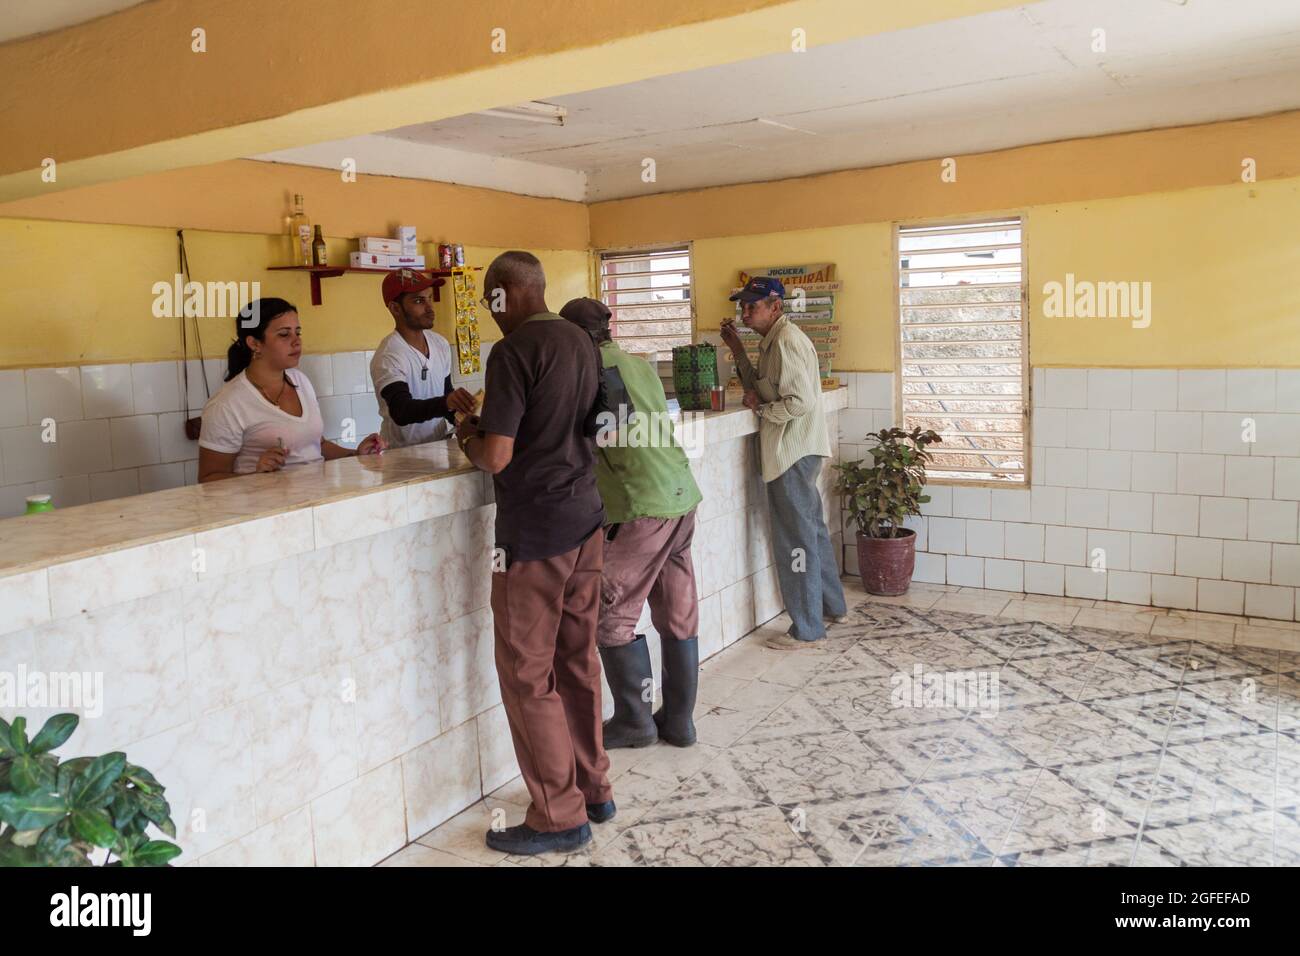 JAGUEY GRANDE, CUBA - FEB 16, 2016: Interior of a small shop in Jaguey Grande town, Cuba Stock Photo